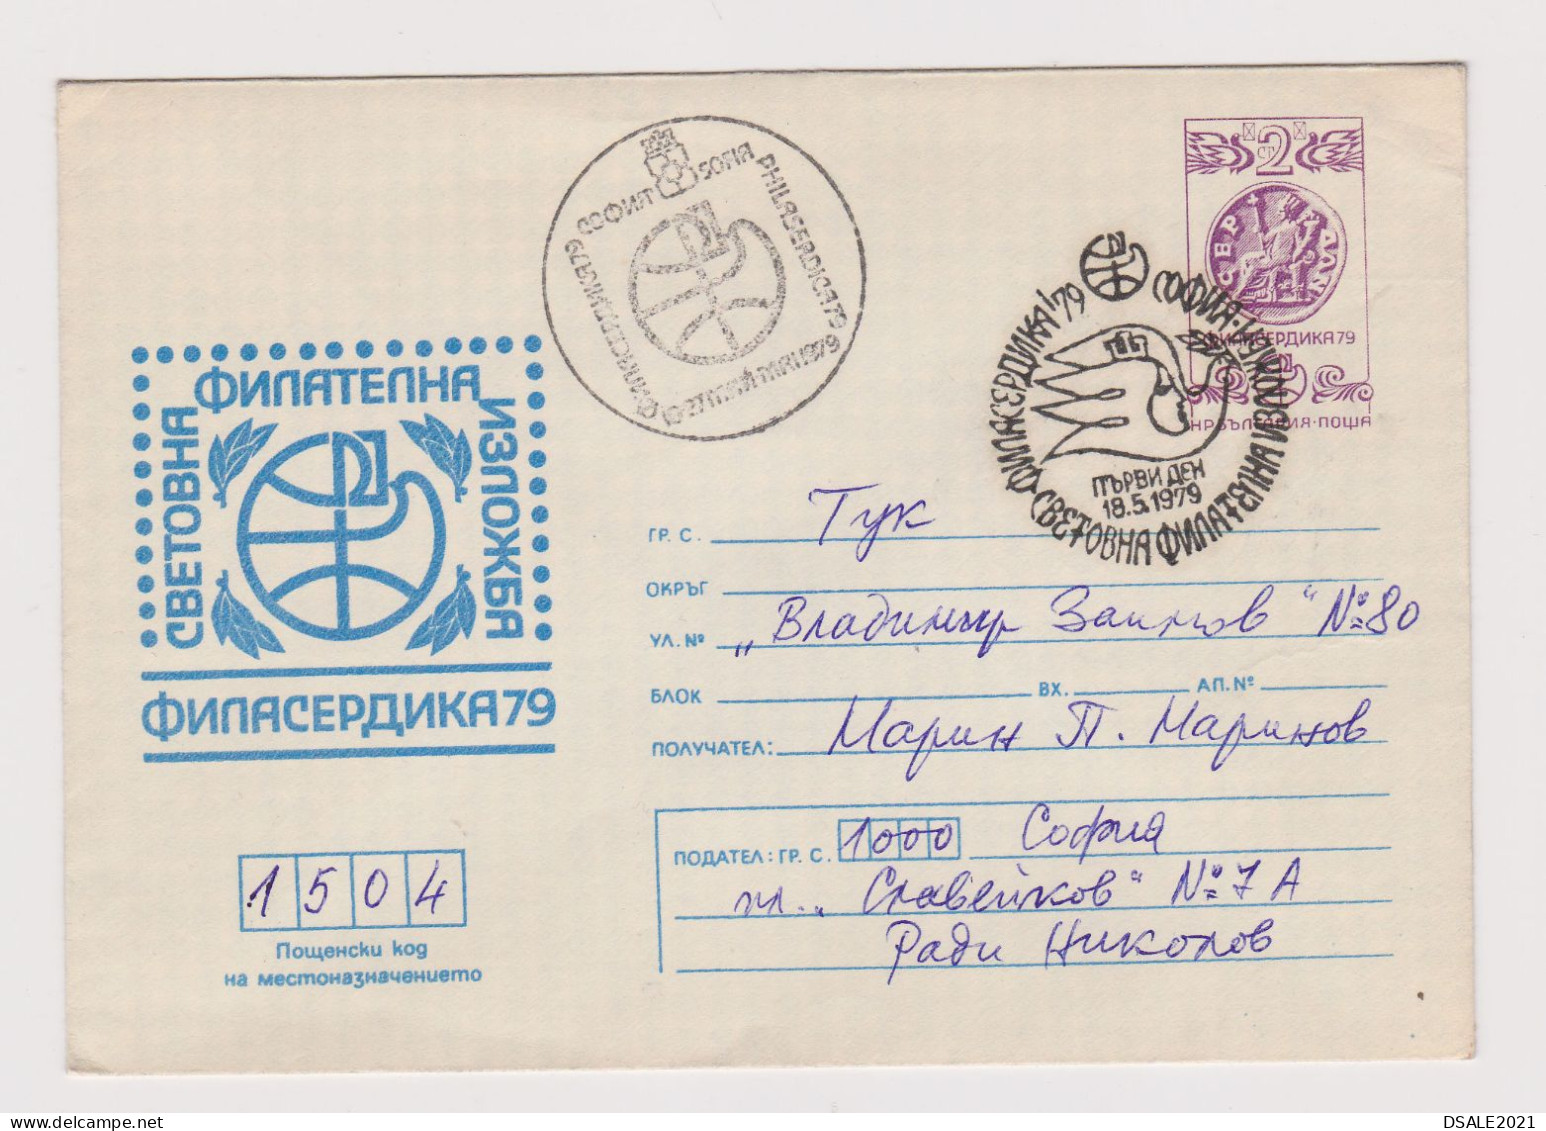 Bulgaria Bulgarien Bulgarie 1979 Postal Stationery Cover PSE, Entier, SOFIA-World Philatelic Exhibition (66388) - Enveloppes